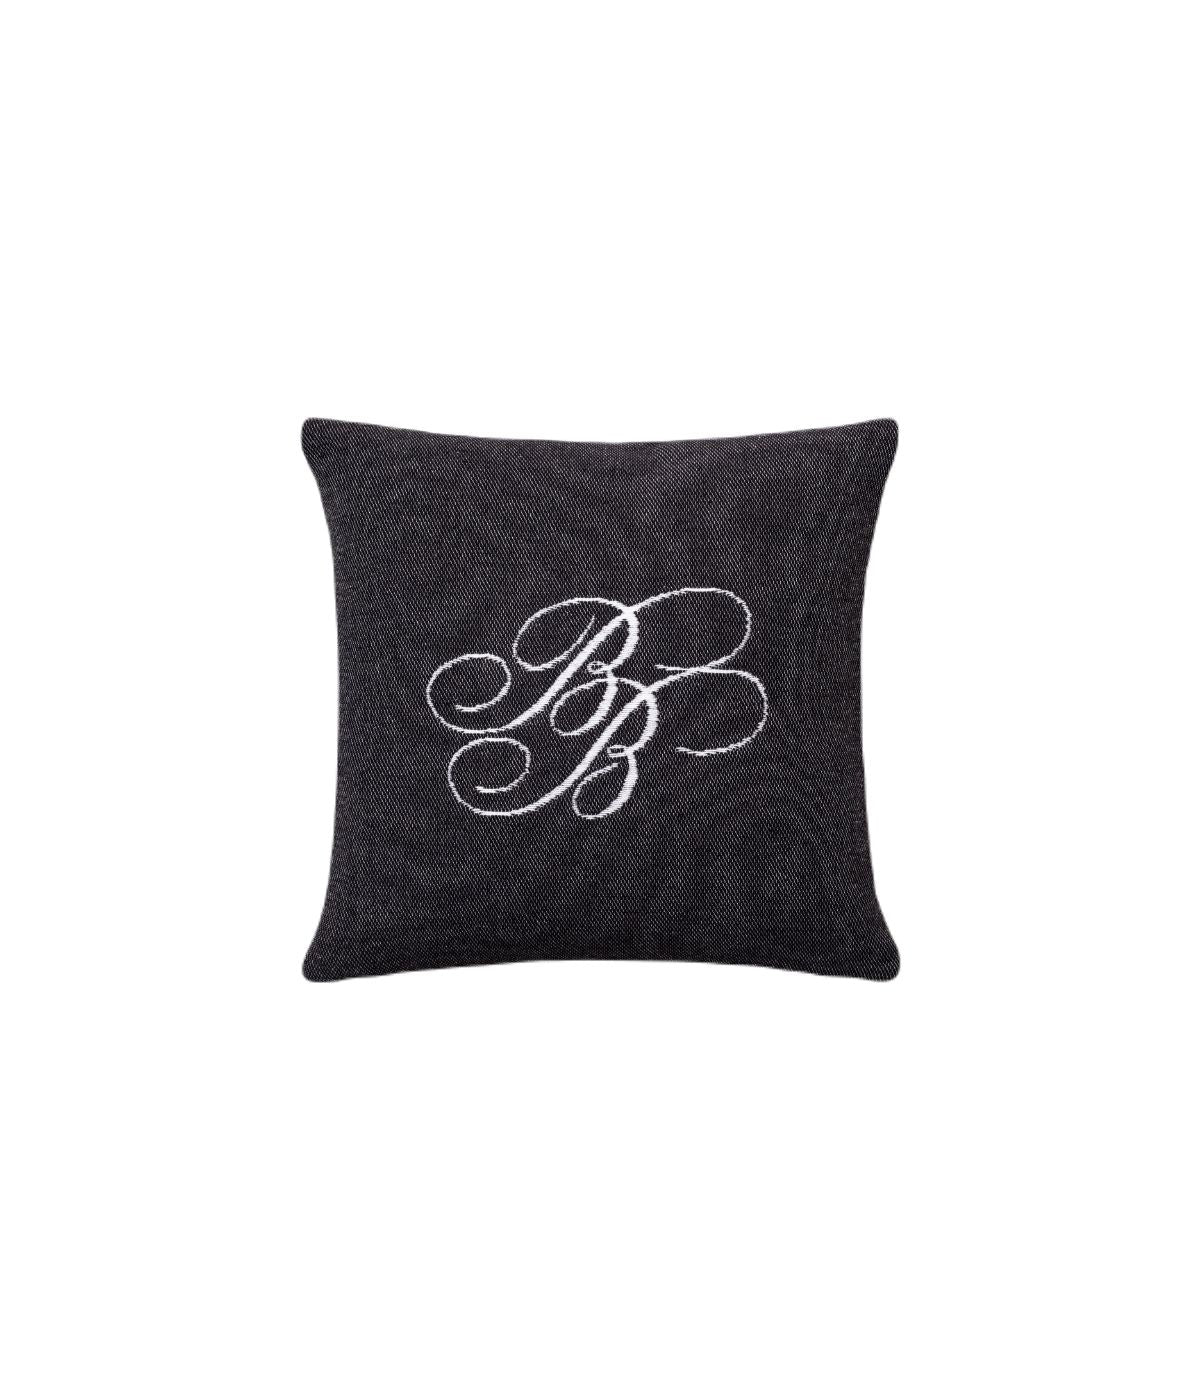 BB Monogram Decorative Pillow Square Black